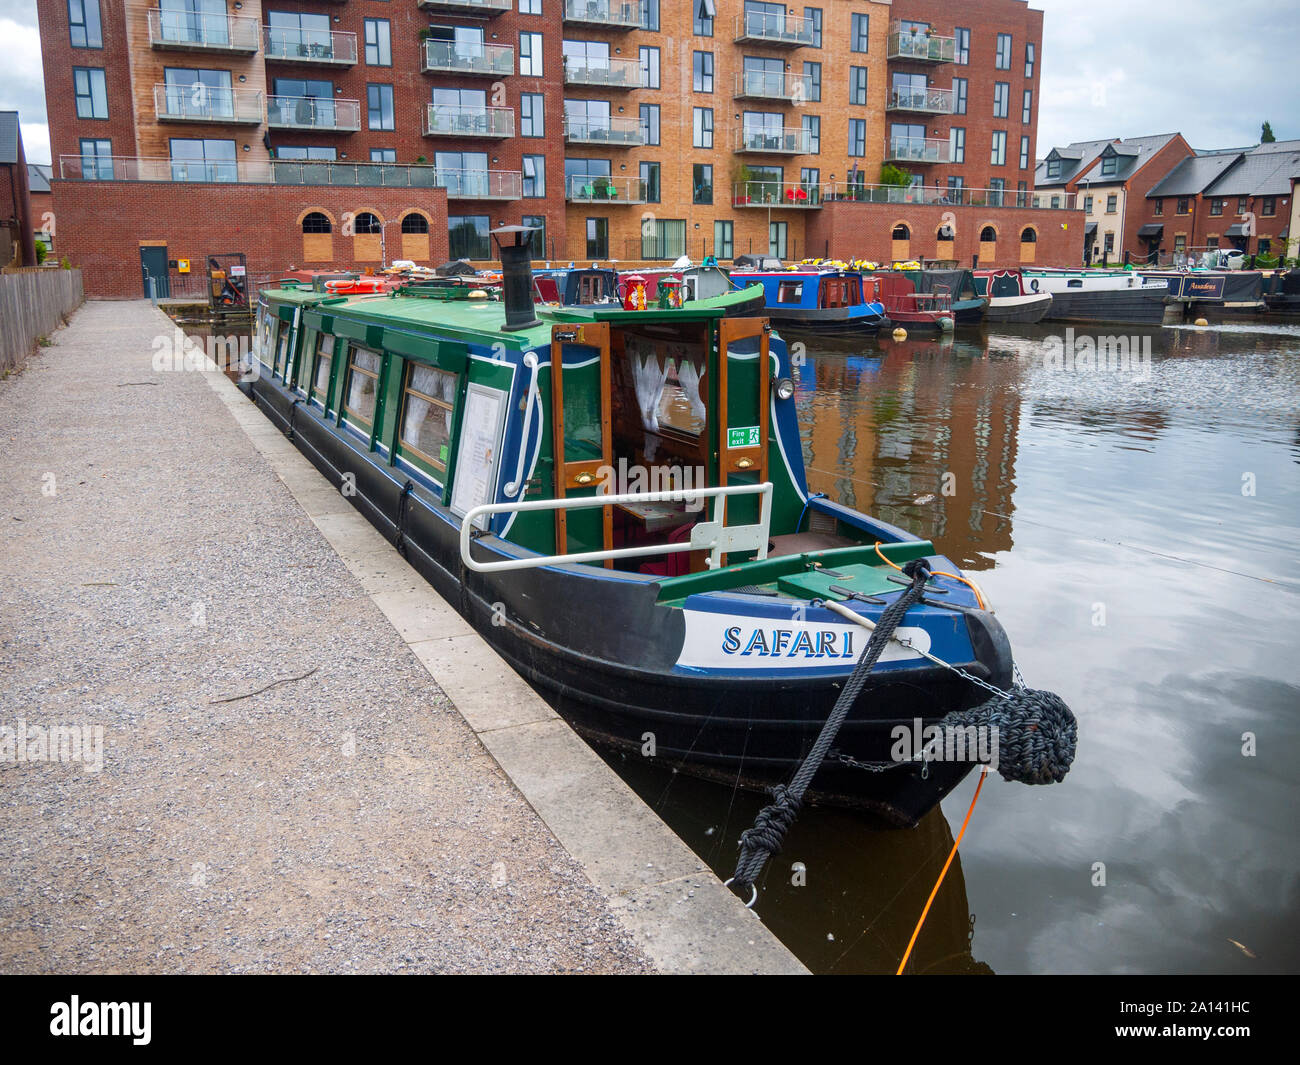 A floating cafe in a canal narrowboat, the Safari, at Droylsden Marina, on the Ashton Canal, Tameside, Manchester, UK Stock Photo